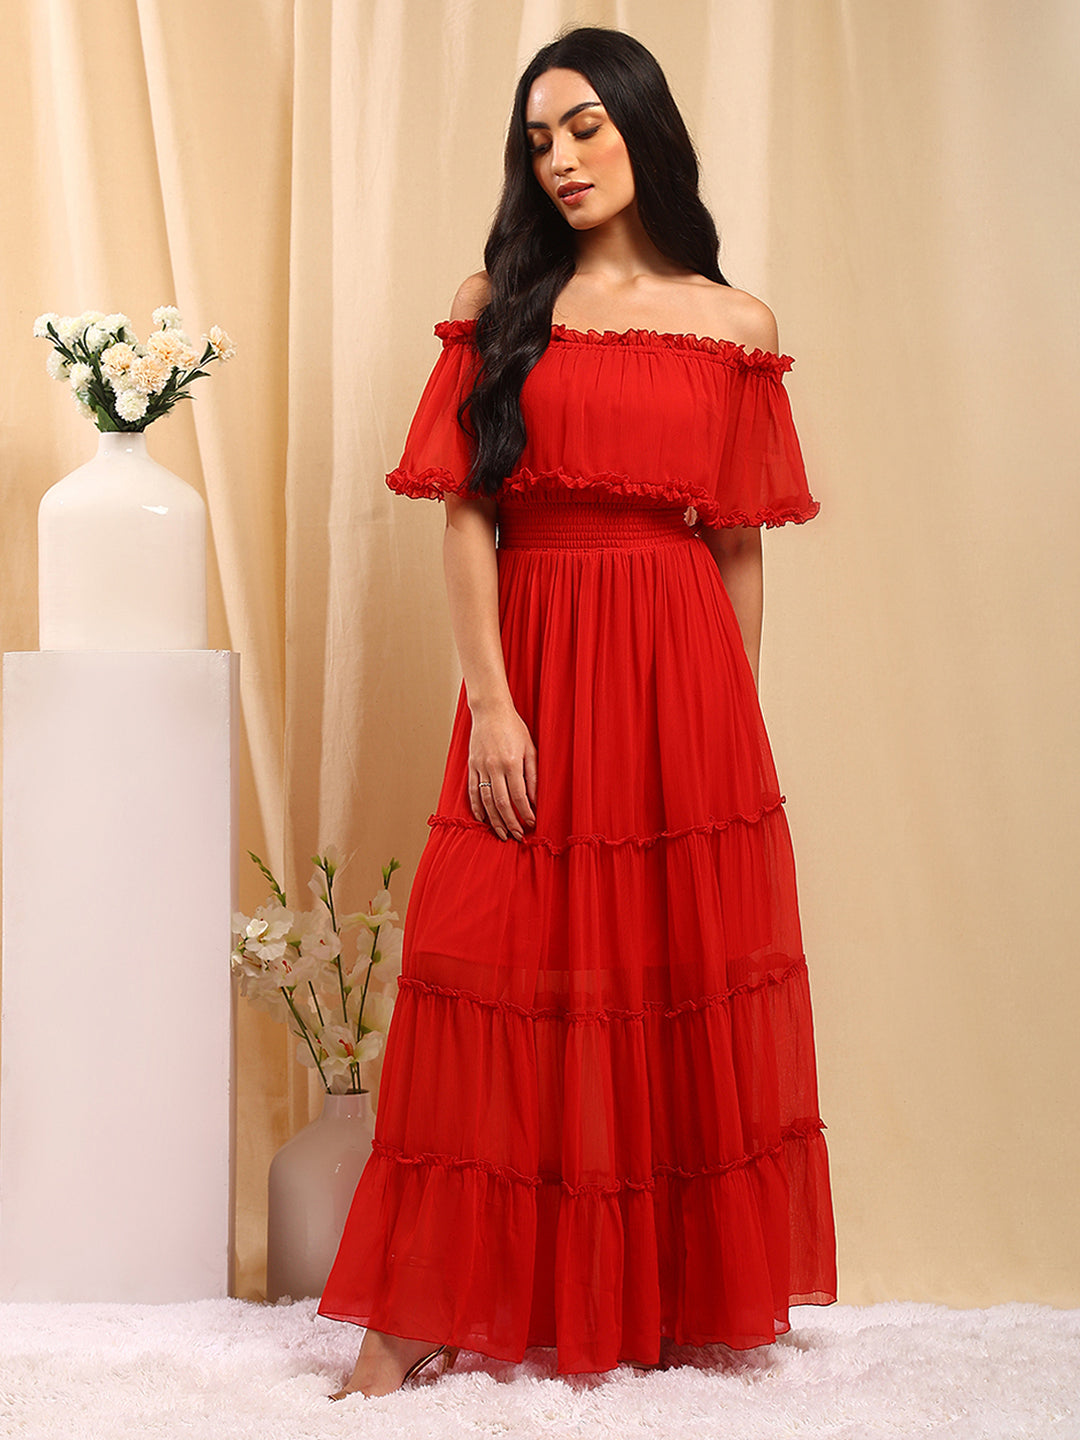 Red Off the Shoulder Dresses for Women for sale | eBay